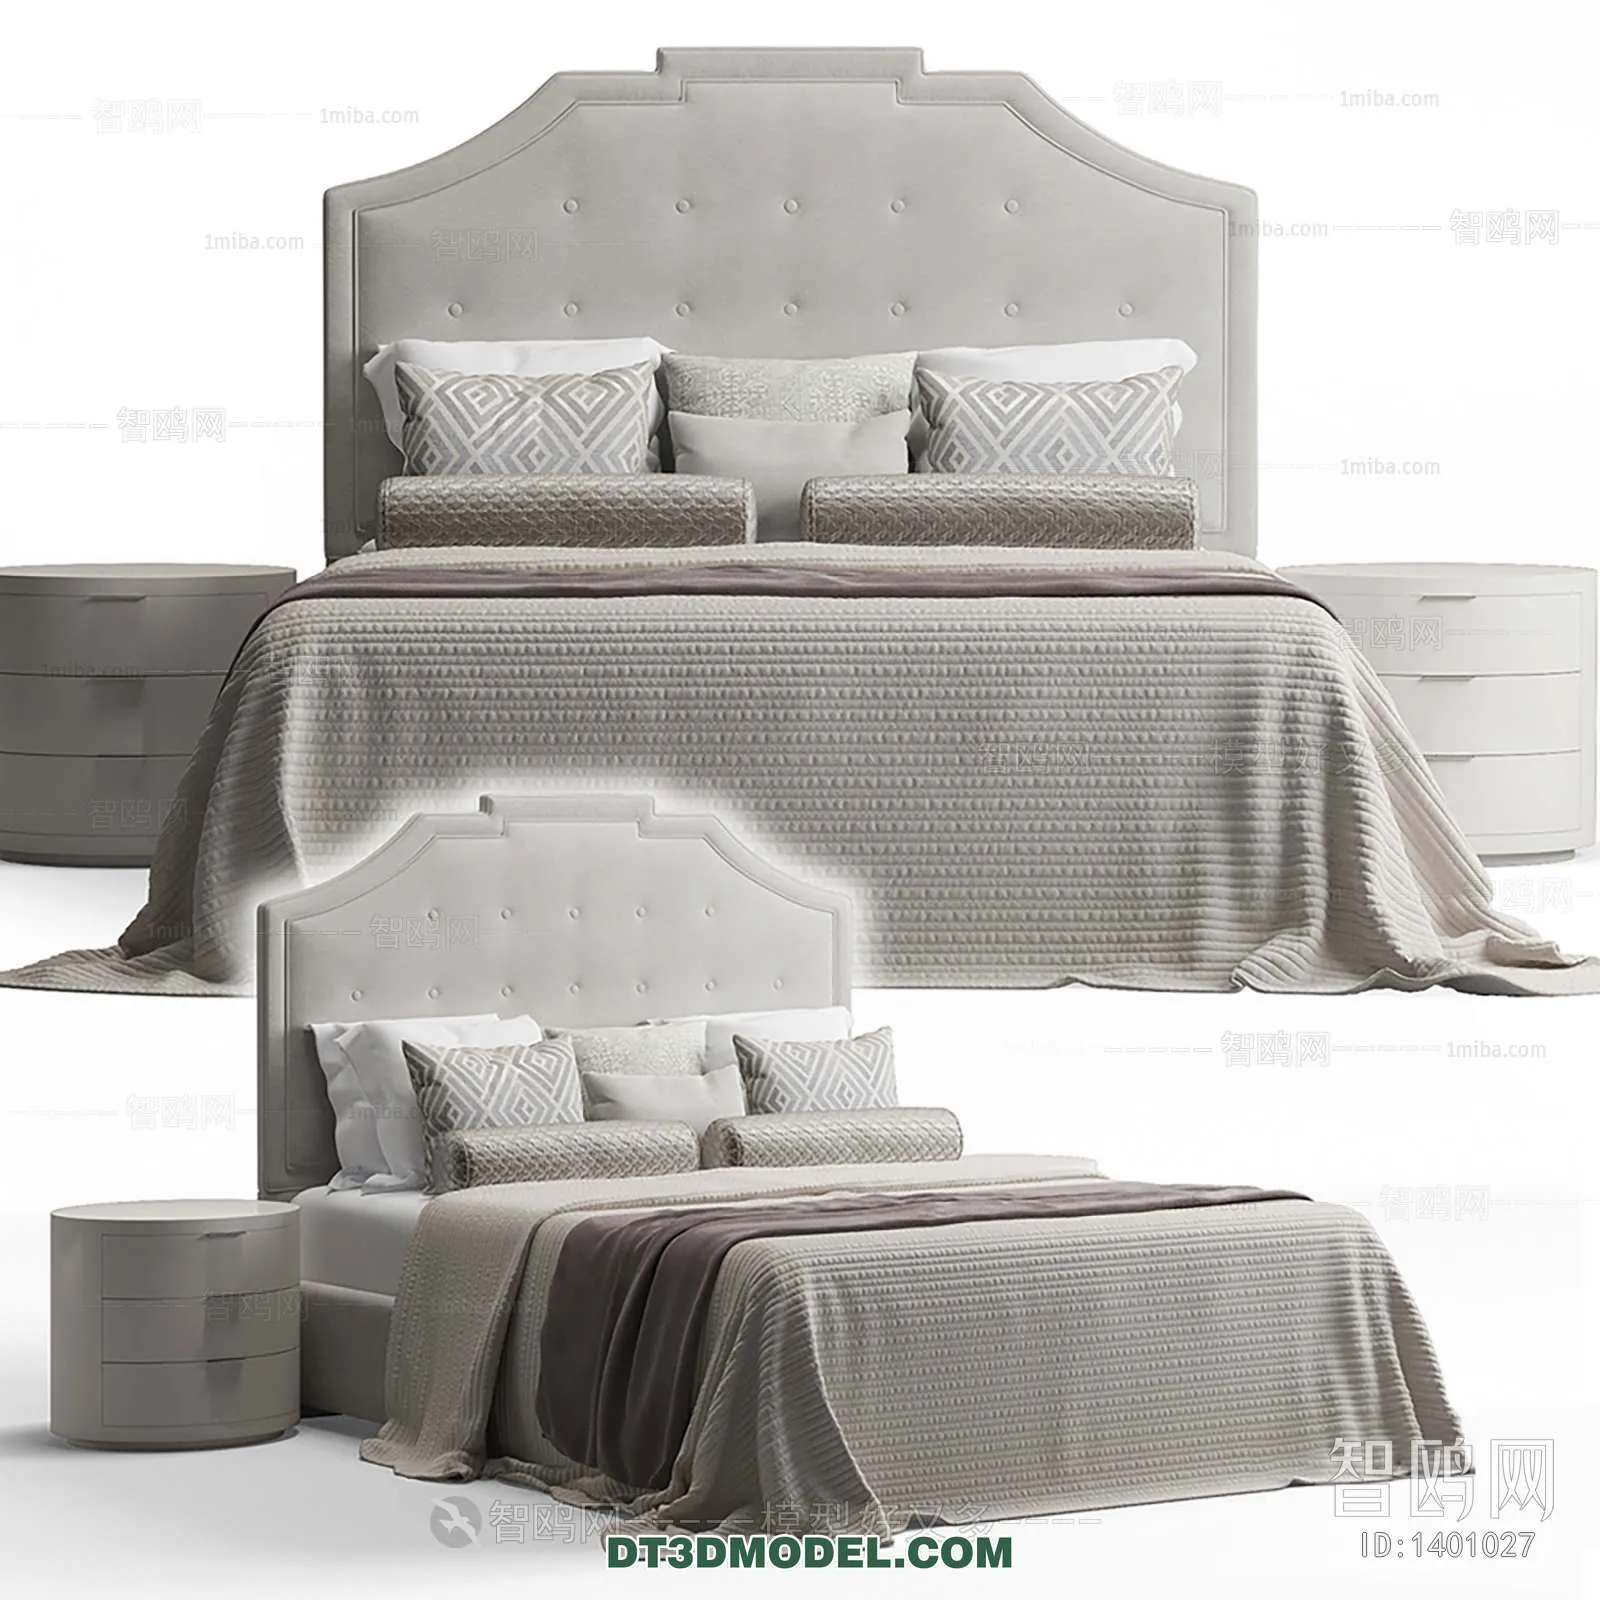 Double Bed 3D Models – 0090